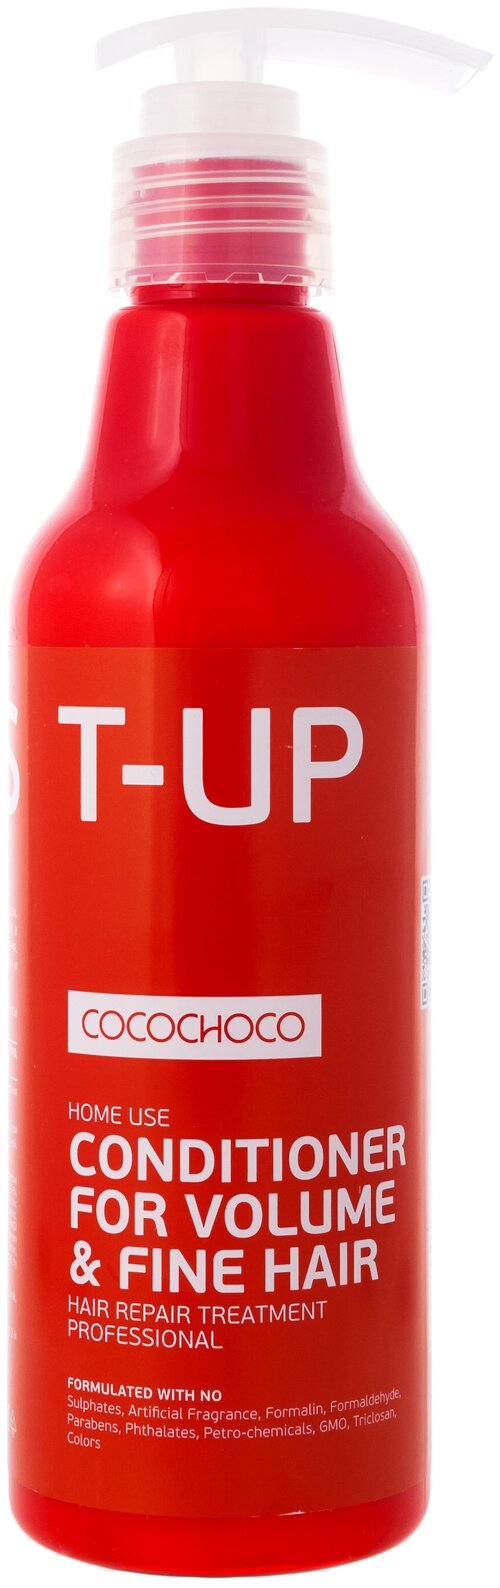 CocoChoco кондиционер Boost-Up Conditioner for Volume & Fine Hair для тонких, лишенных объема волос, 250 мл